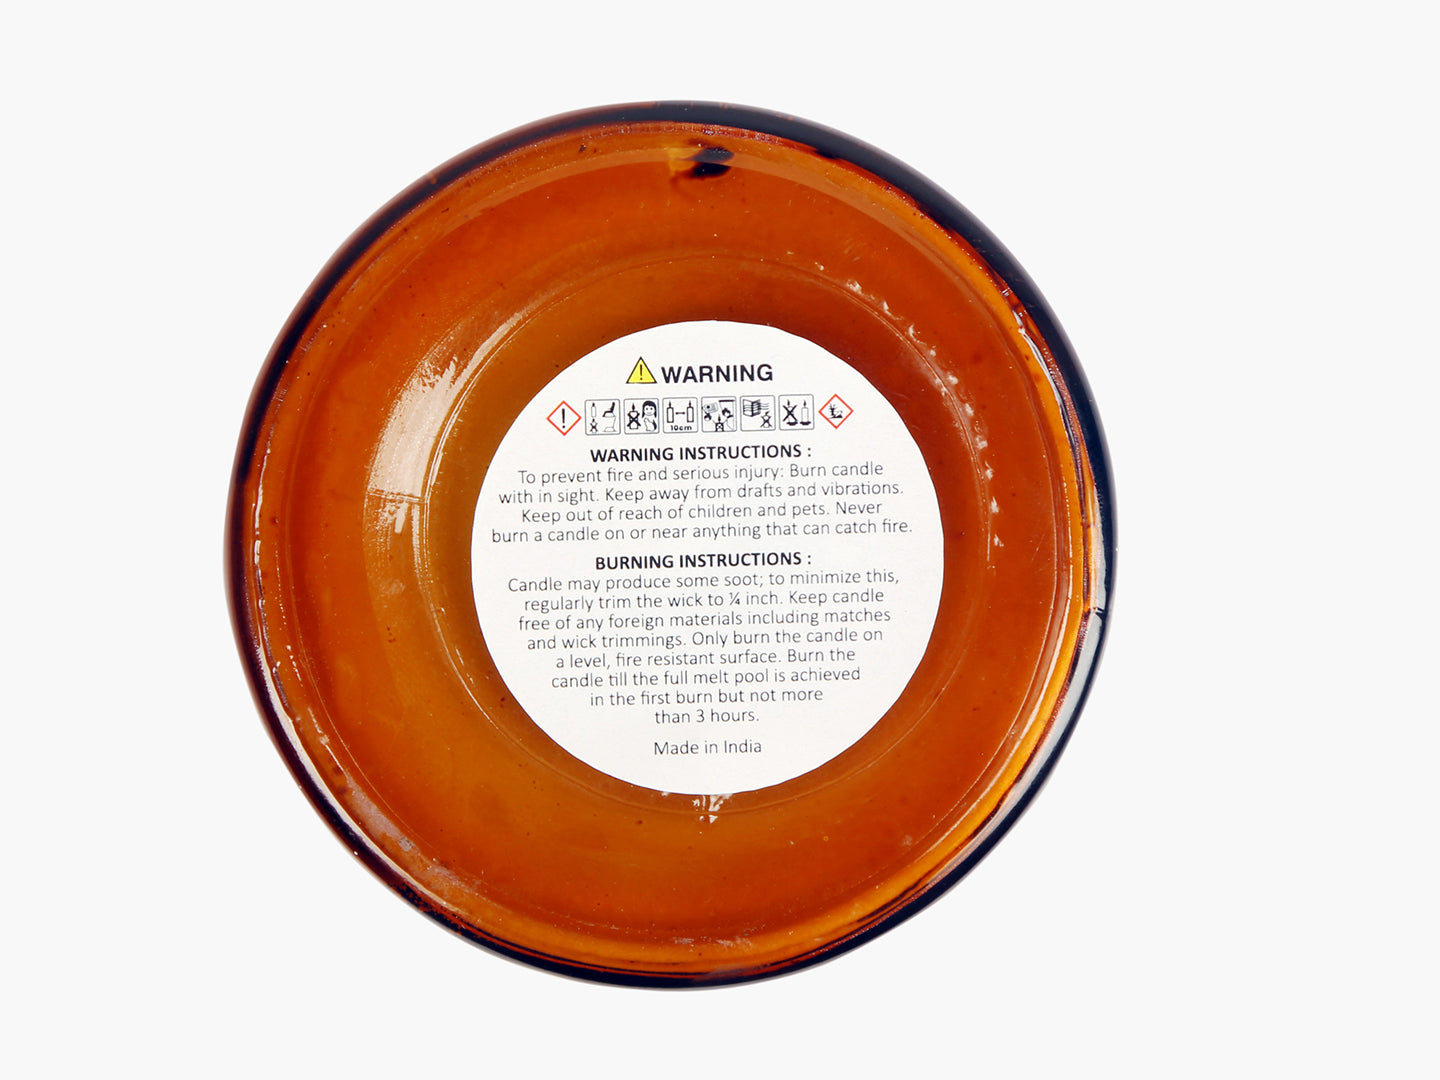 Kumkumadi Scented Candle - Soy Wax | Amber Glass Jar - Ayuda Homes